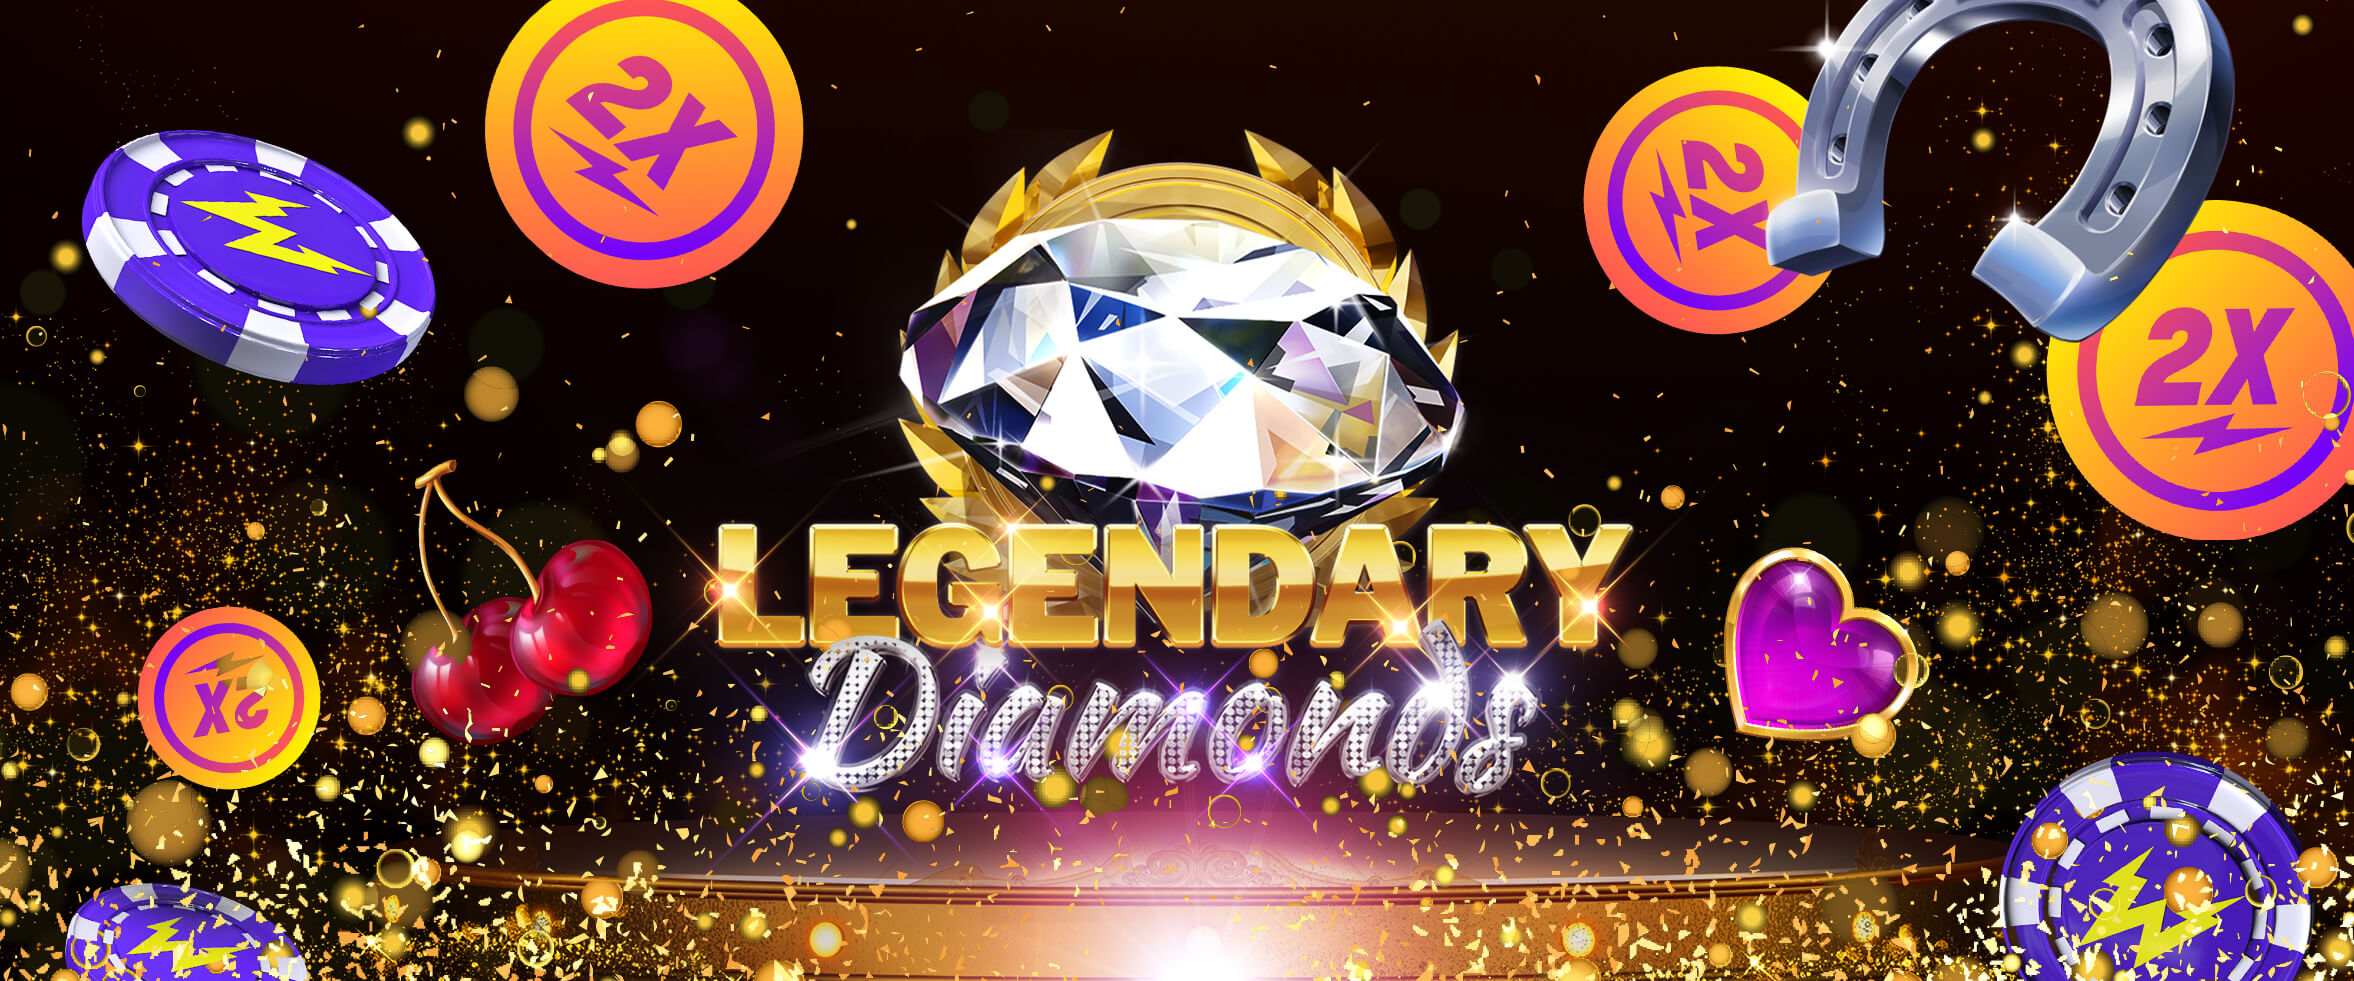 Legendary Diamonds Slot Review: RTP 95.60%, Medium Volatile